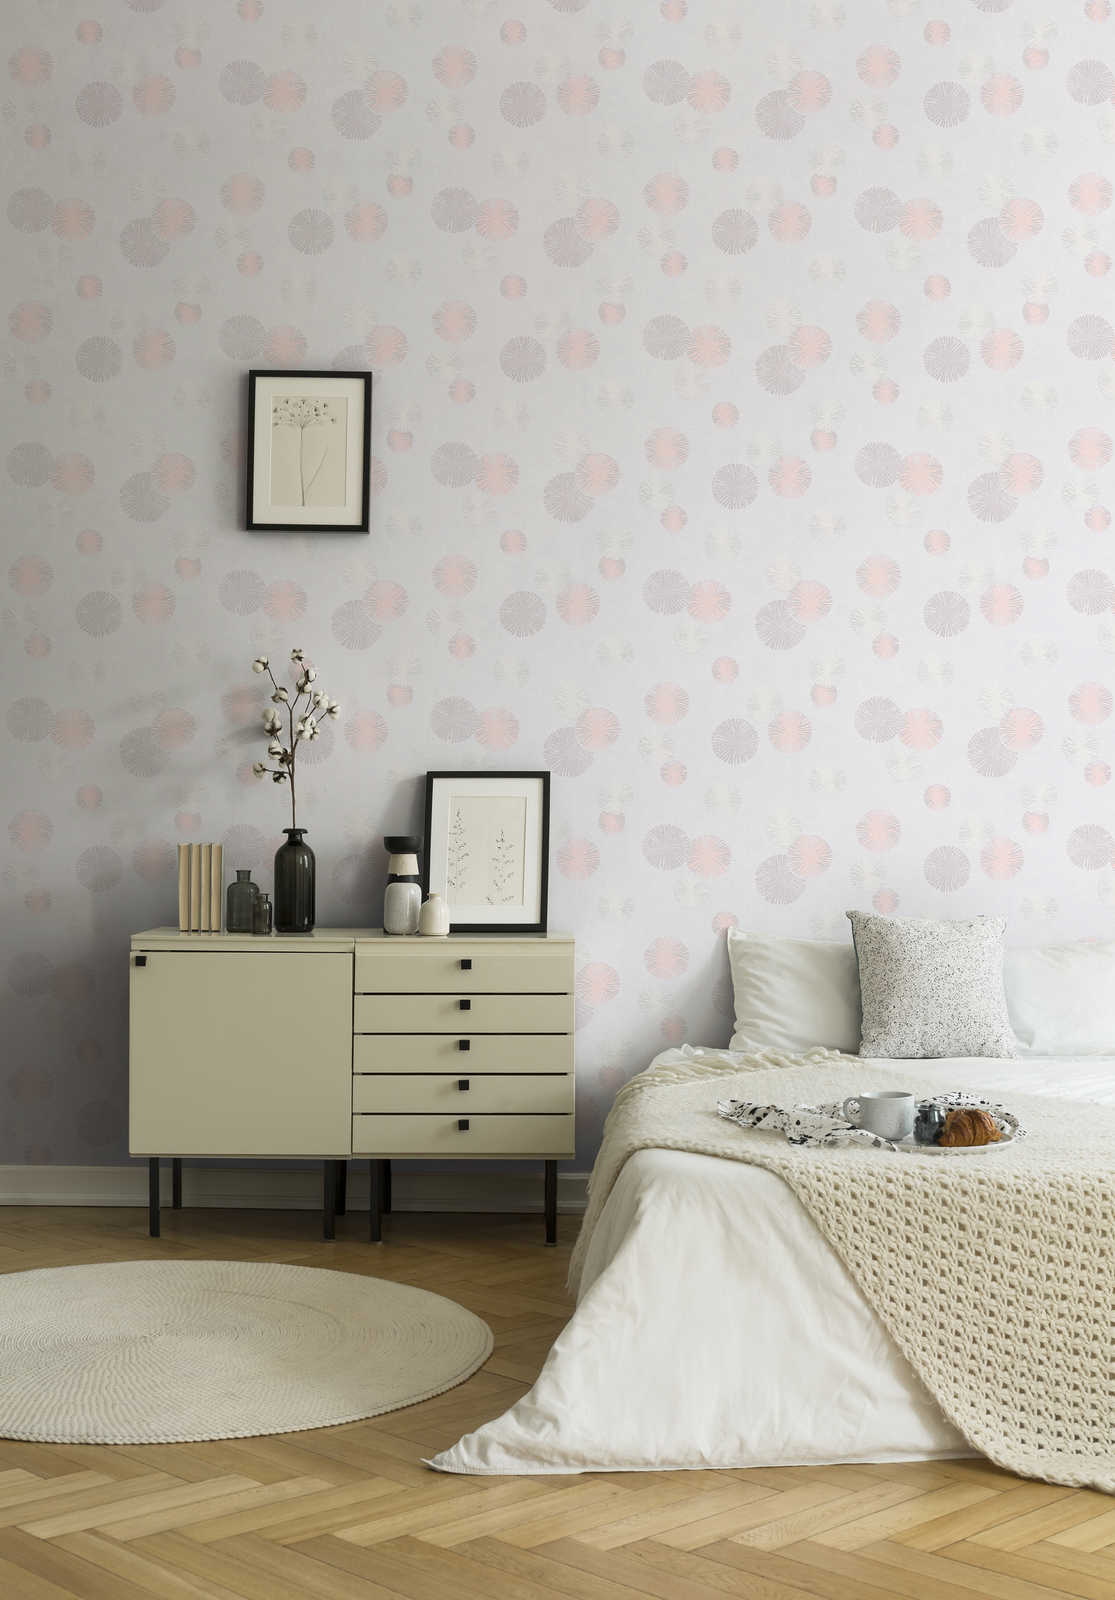             Textured wallpaper with graphic pattern - cream, metallic, pink
        